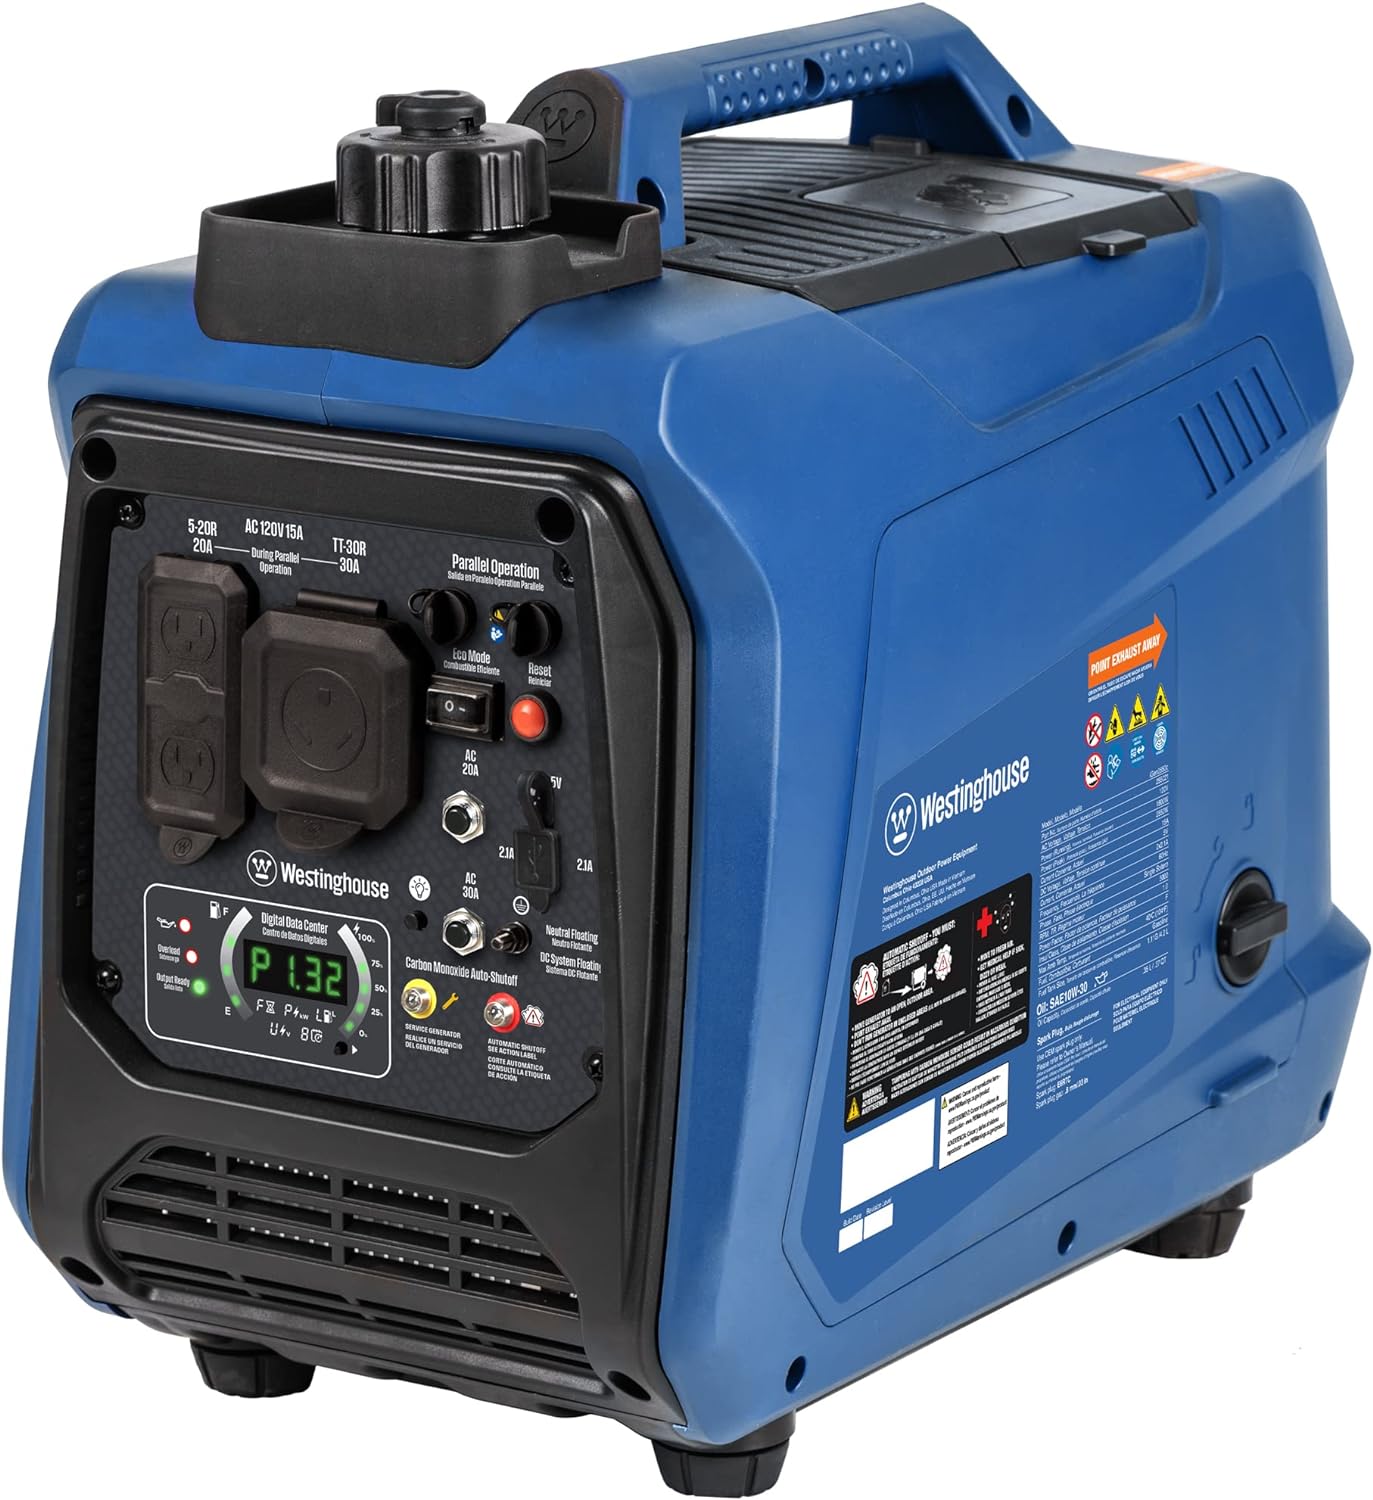 Westinghouse, Westinghouse iGen2550c Inverter Generator 1800W/2550W 30 Amp Recoil Start Gas with CO Sensor New